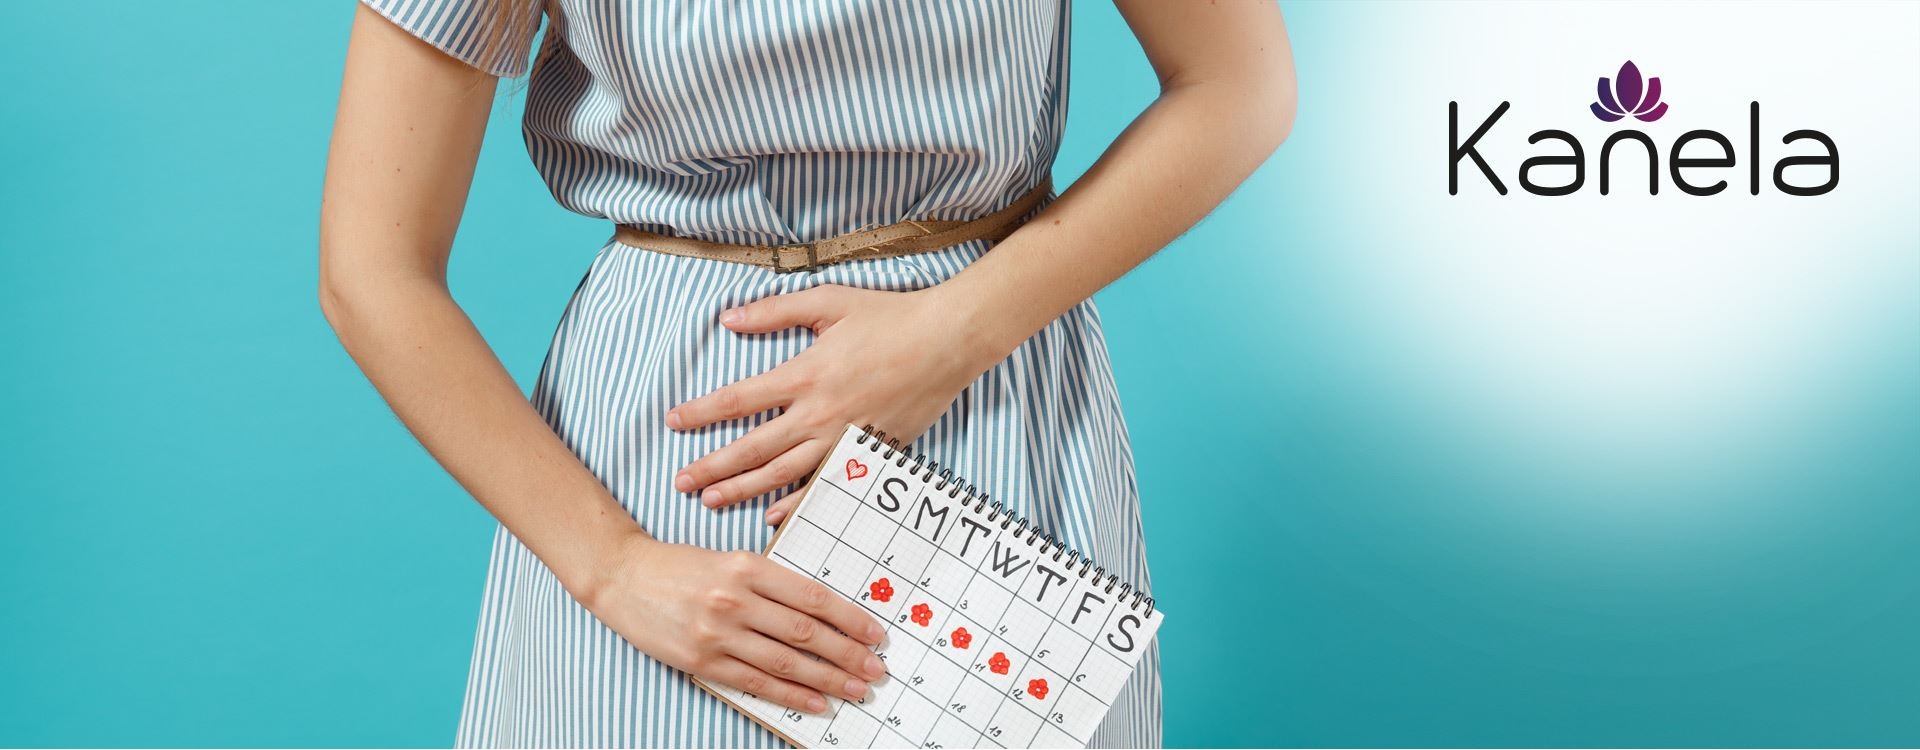 Was tun bei Menstruationsbeschwerden?